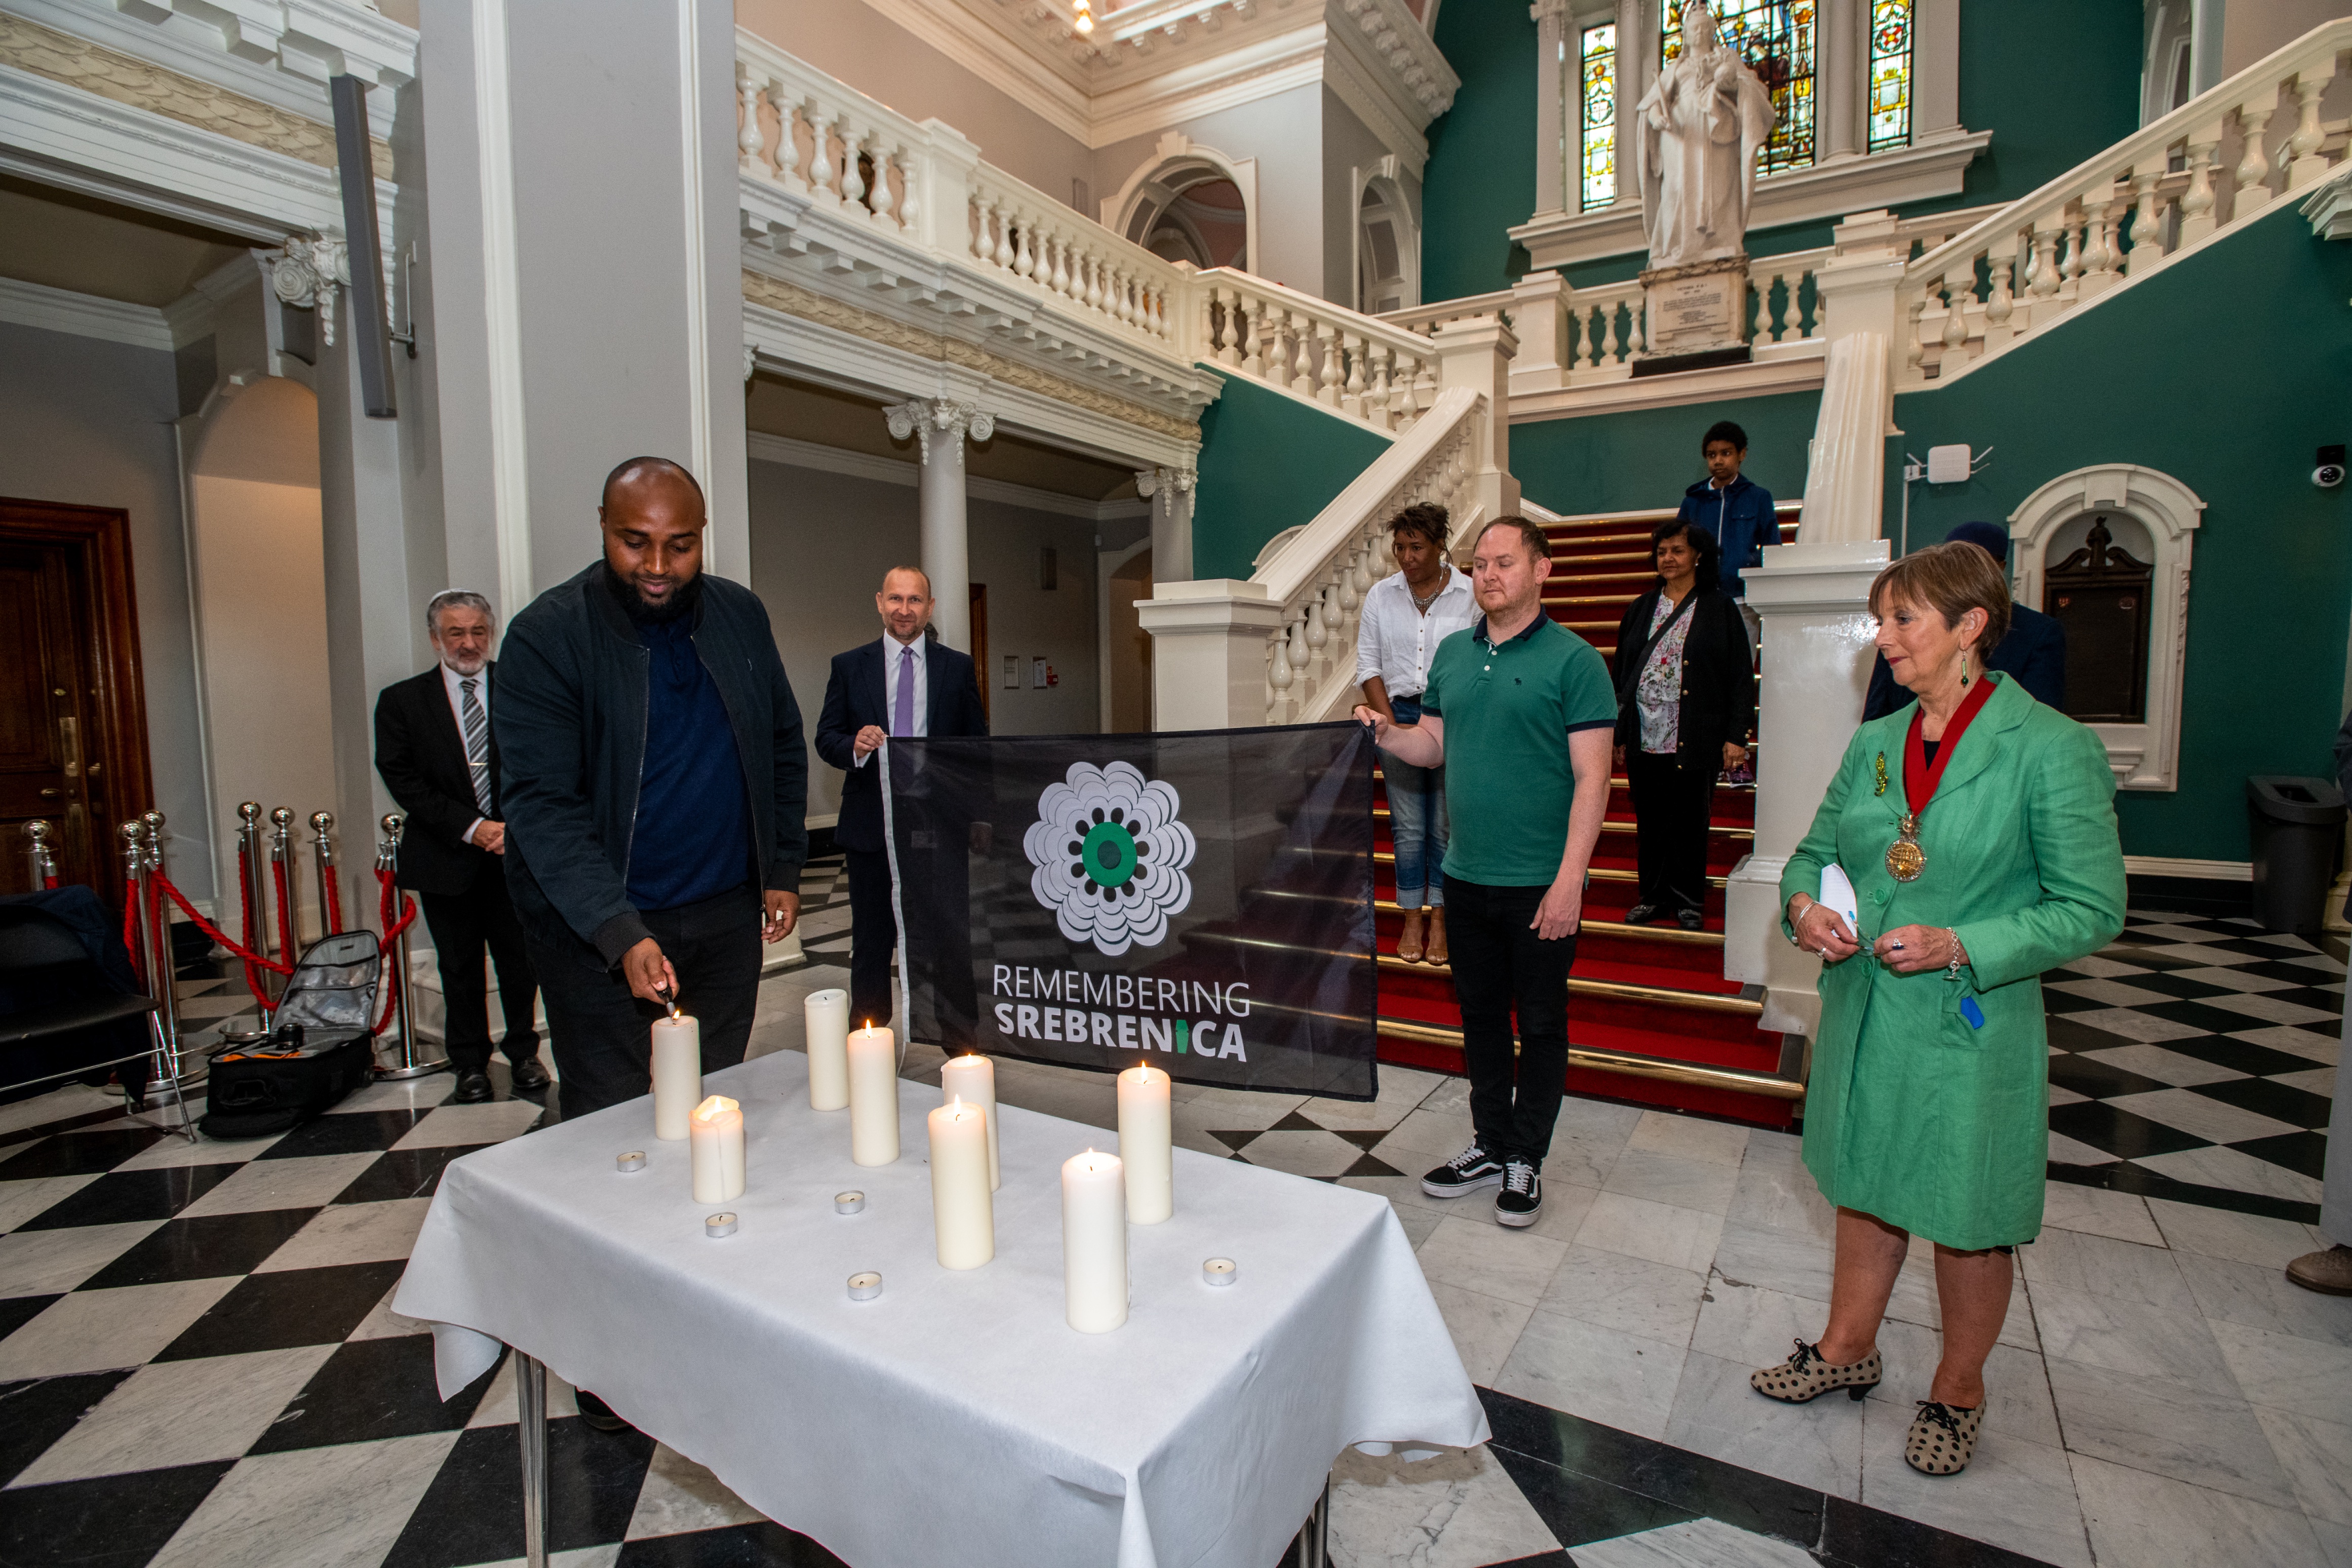 Ceremony to remember the Srebrenica massacre